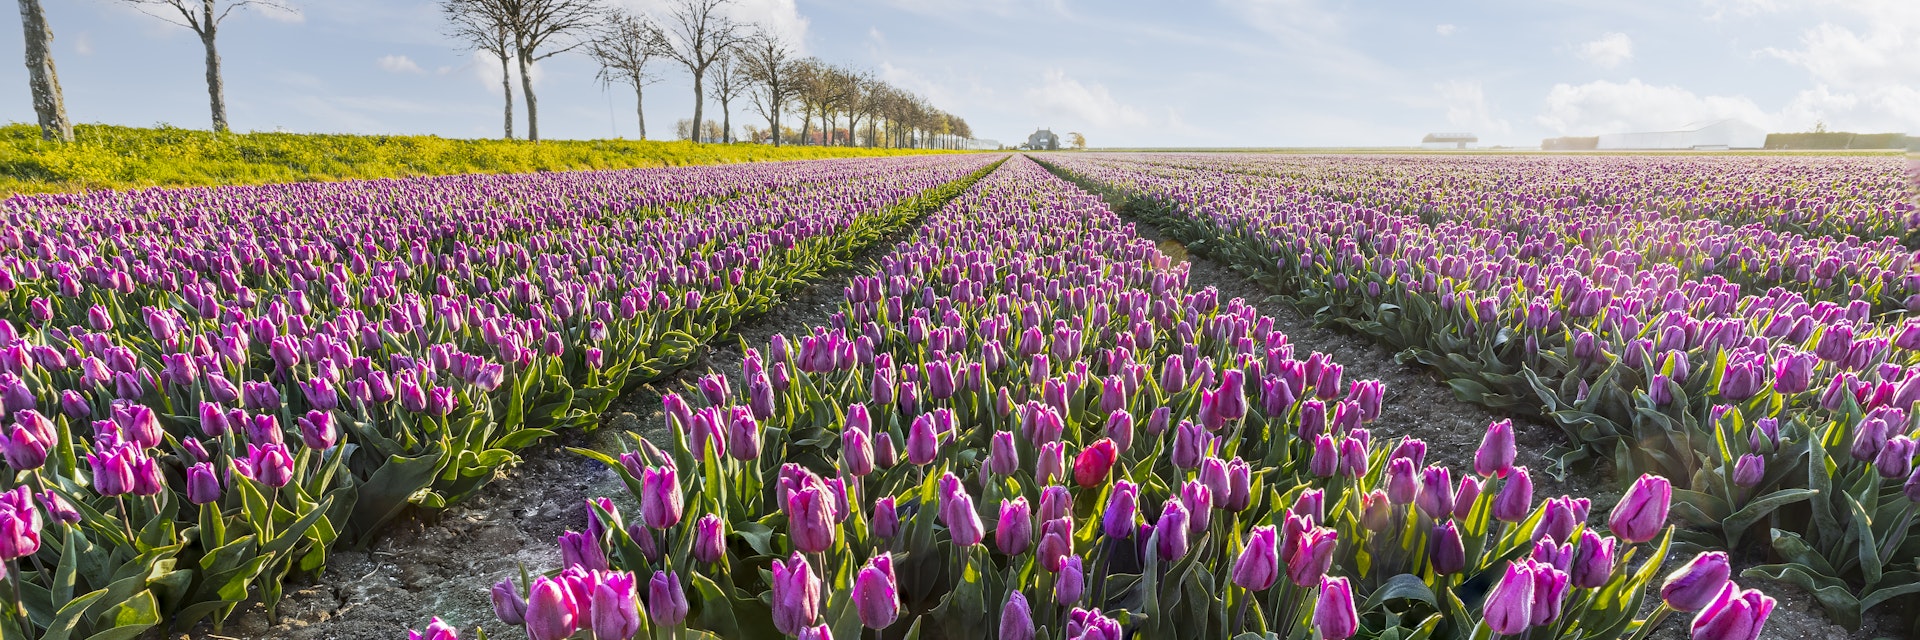 Rows of purple Dutch tulips on a bulb field in the Flevopolder - Flevoland.